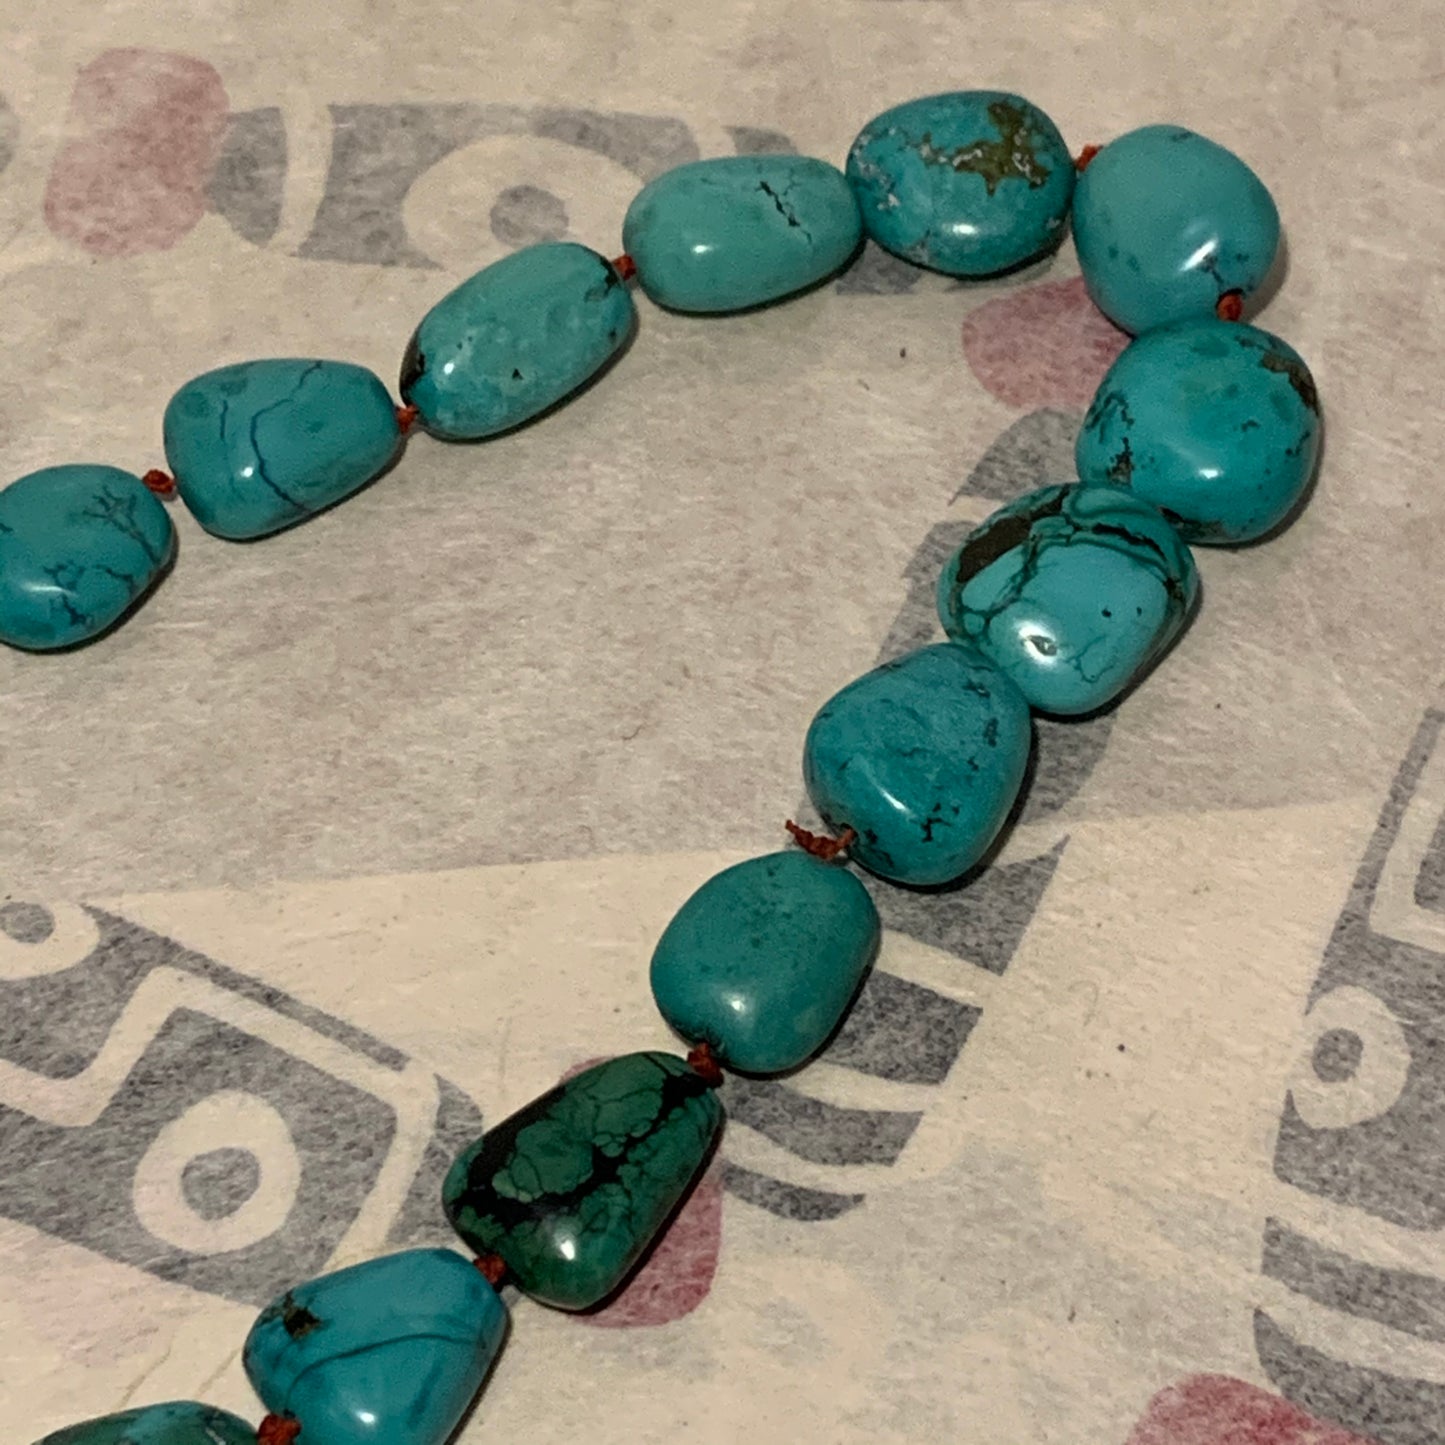 Antique Tibetan Turquoise bead necklace